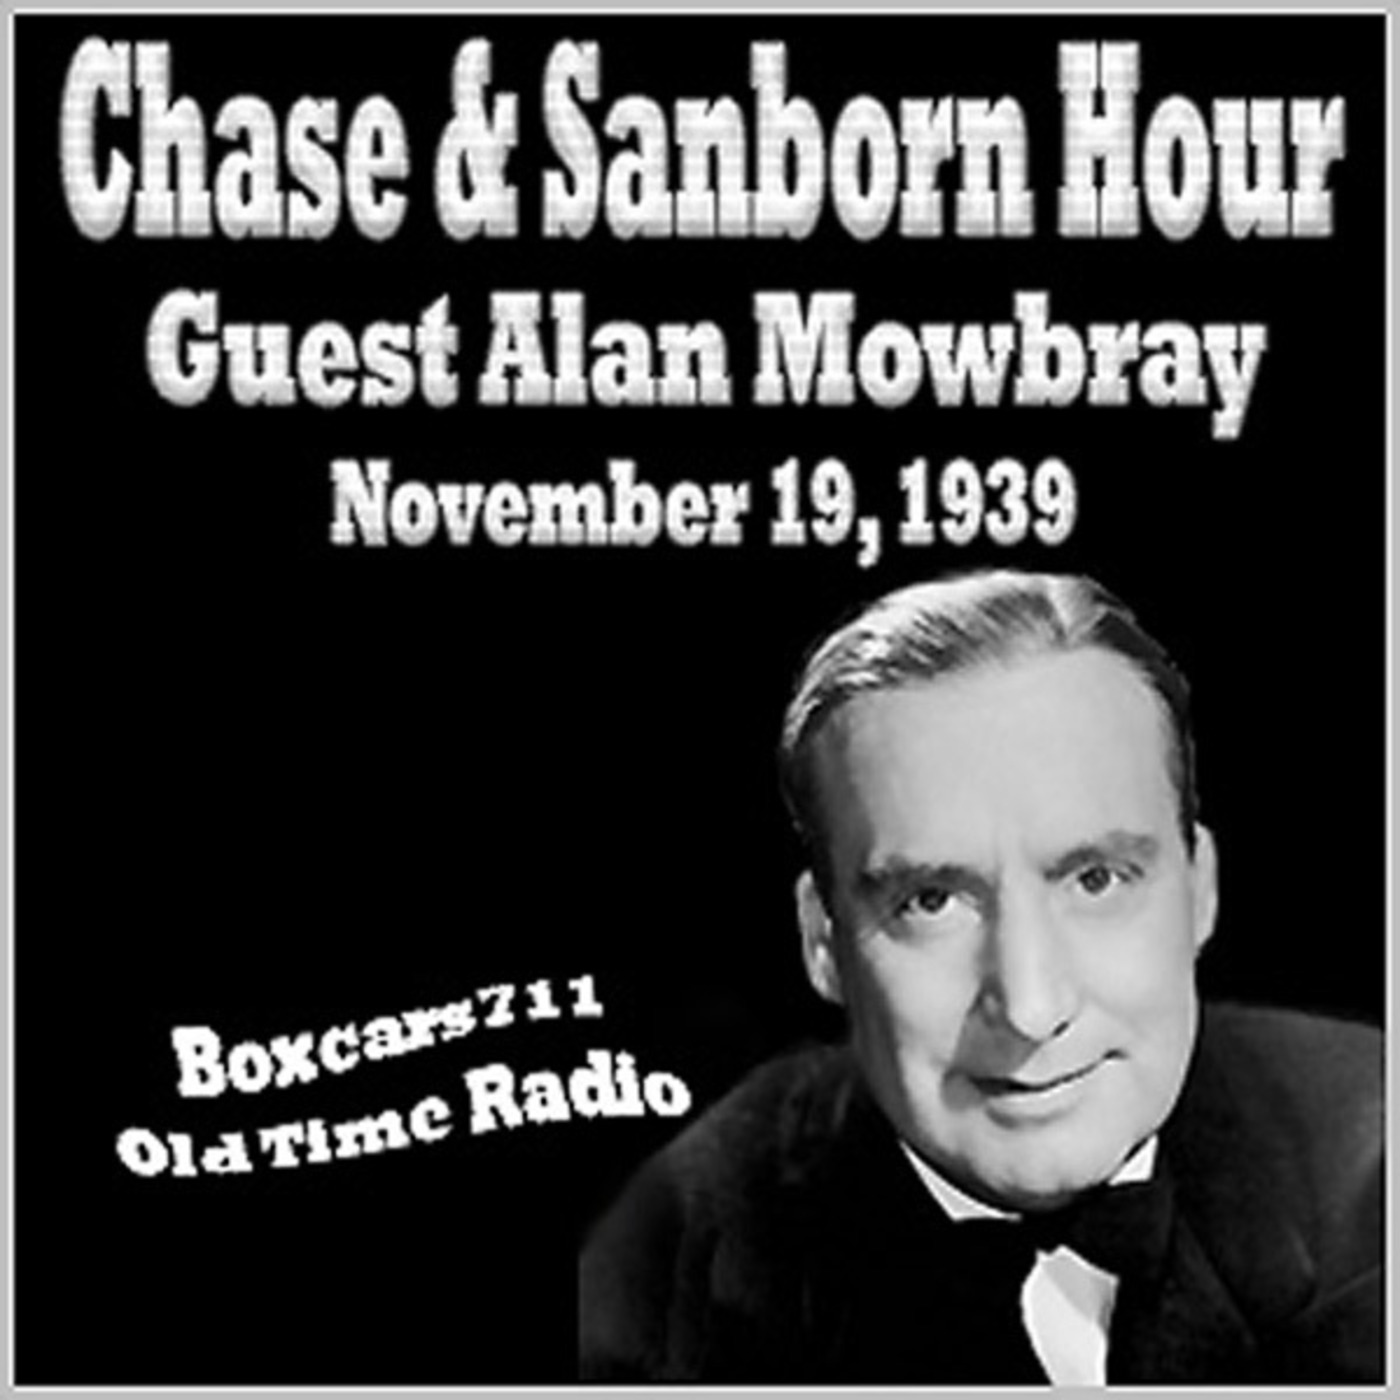 Episode 9618: Chase & Sanborn Hour - 